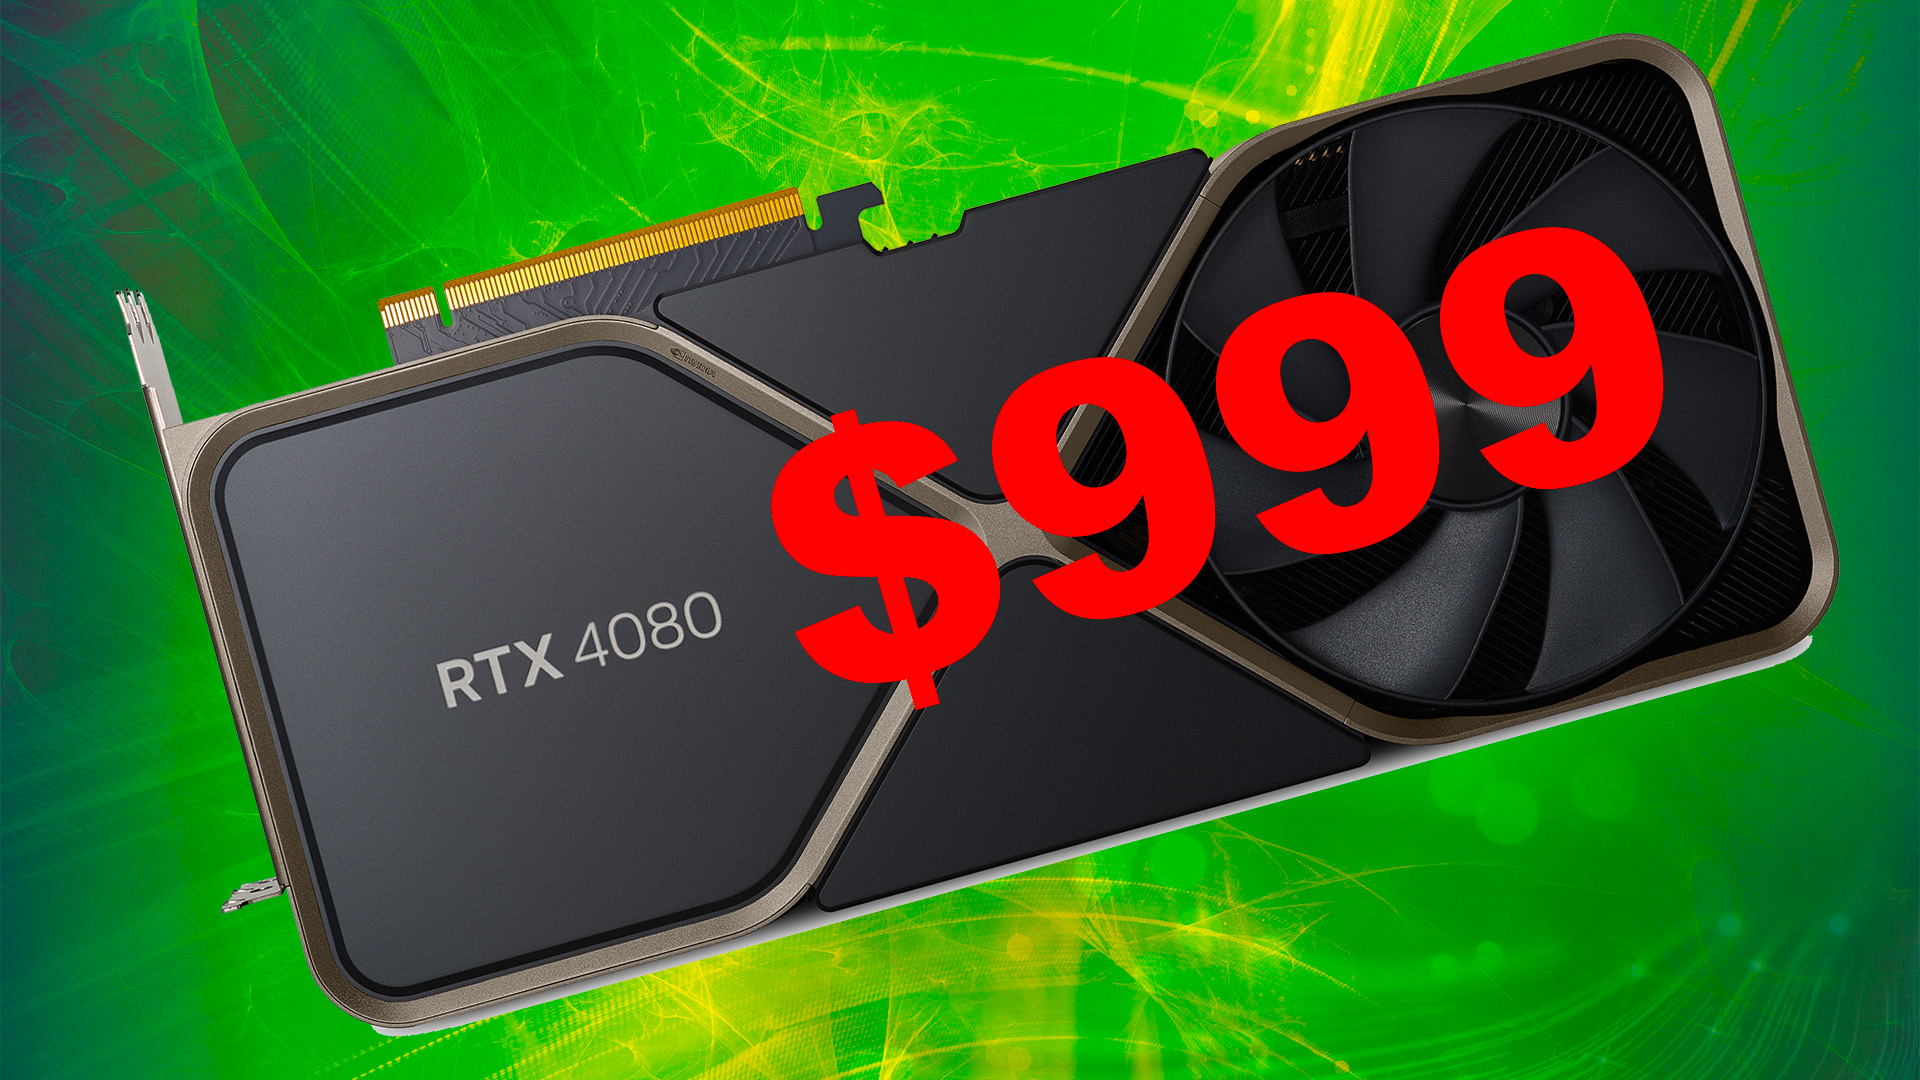 MSI GeForce RTX 4080 Price - Swappa